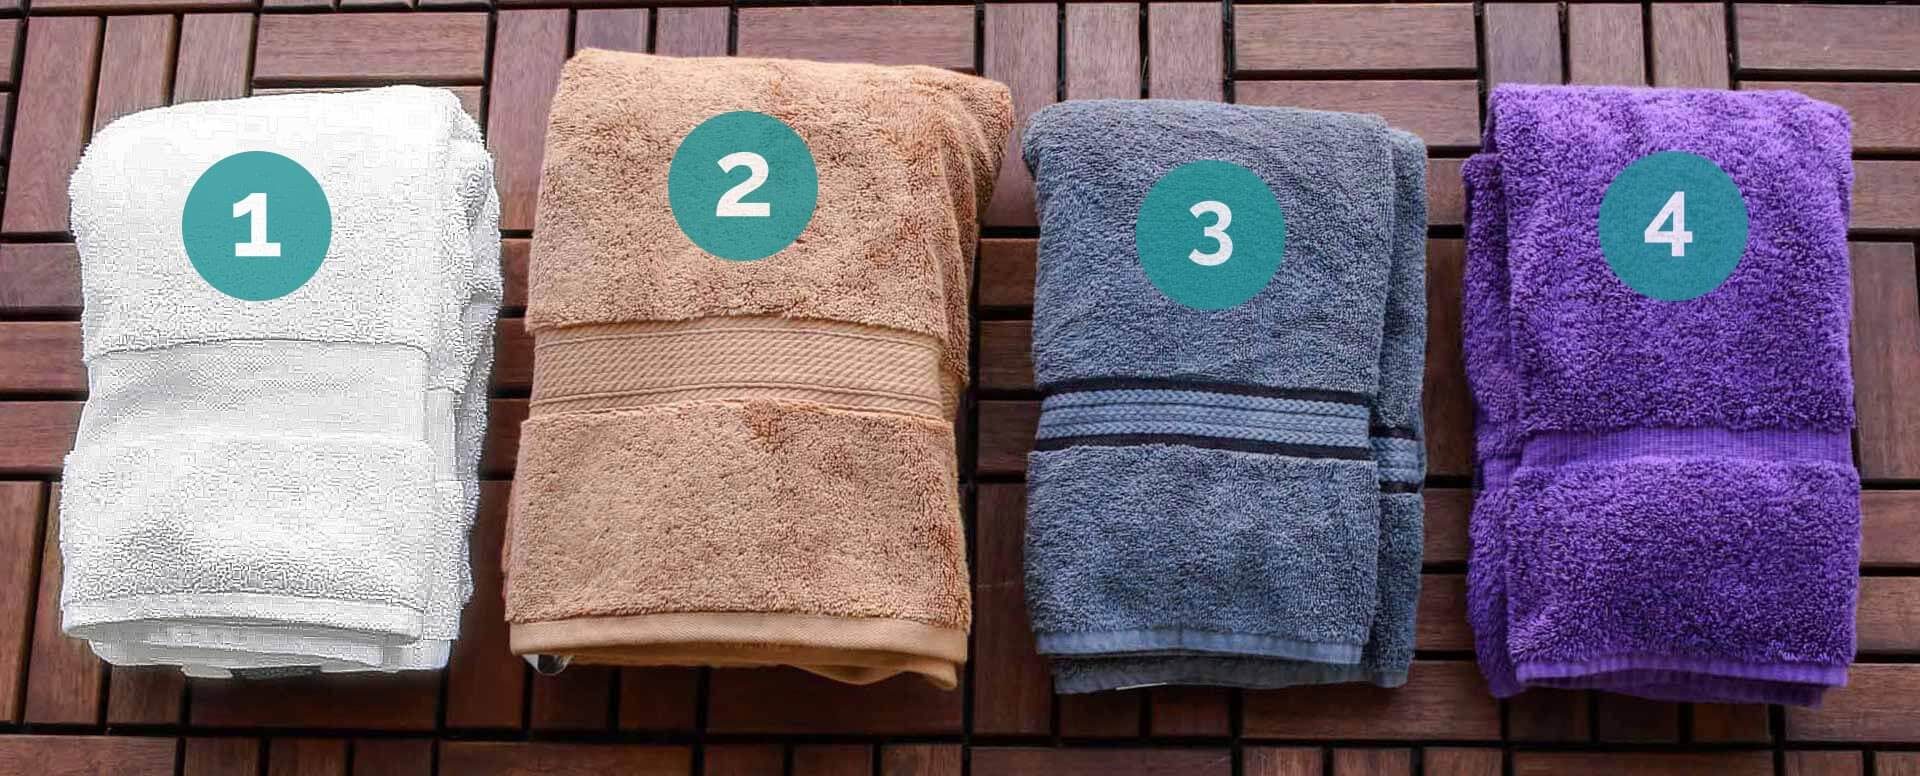 Fieldcrest Heritage Oversized Spa Bath Towel | Beige | One Size | Bath Towels Hand Towels